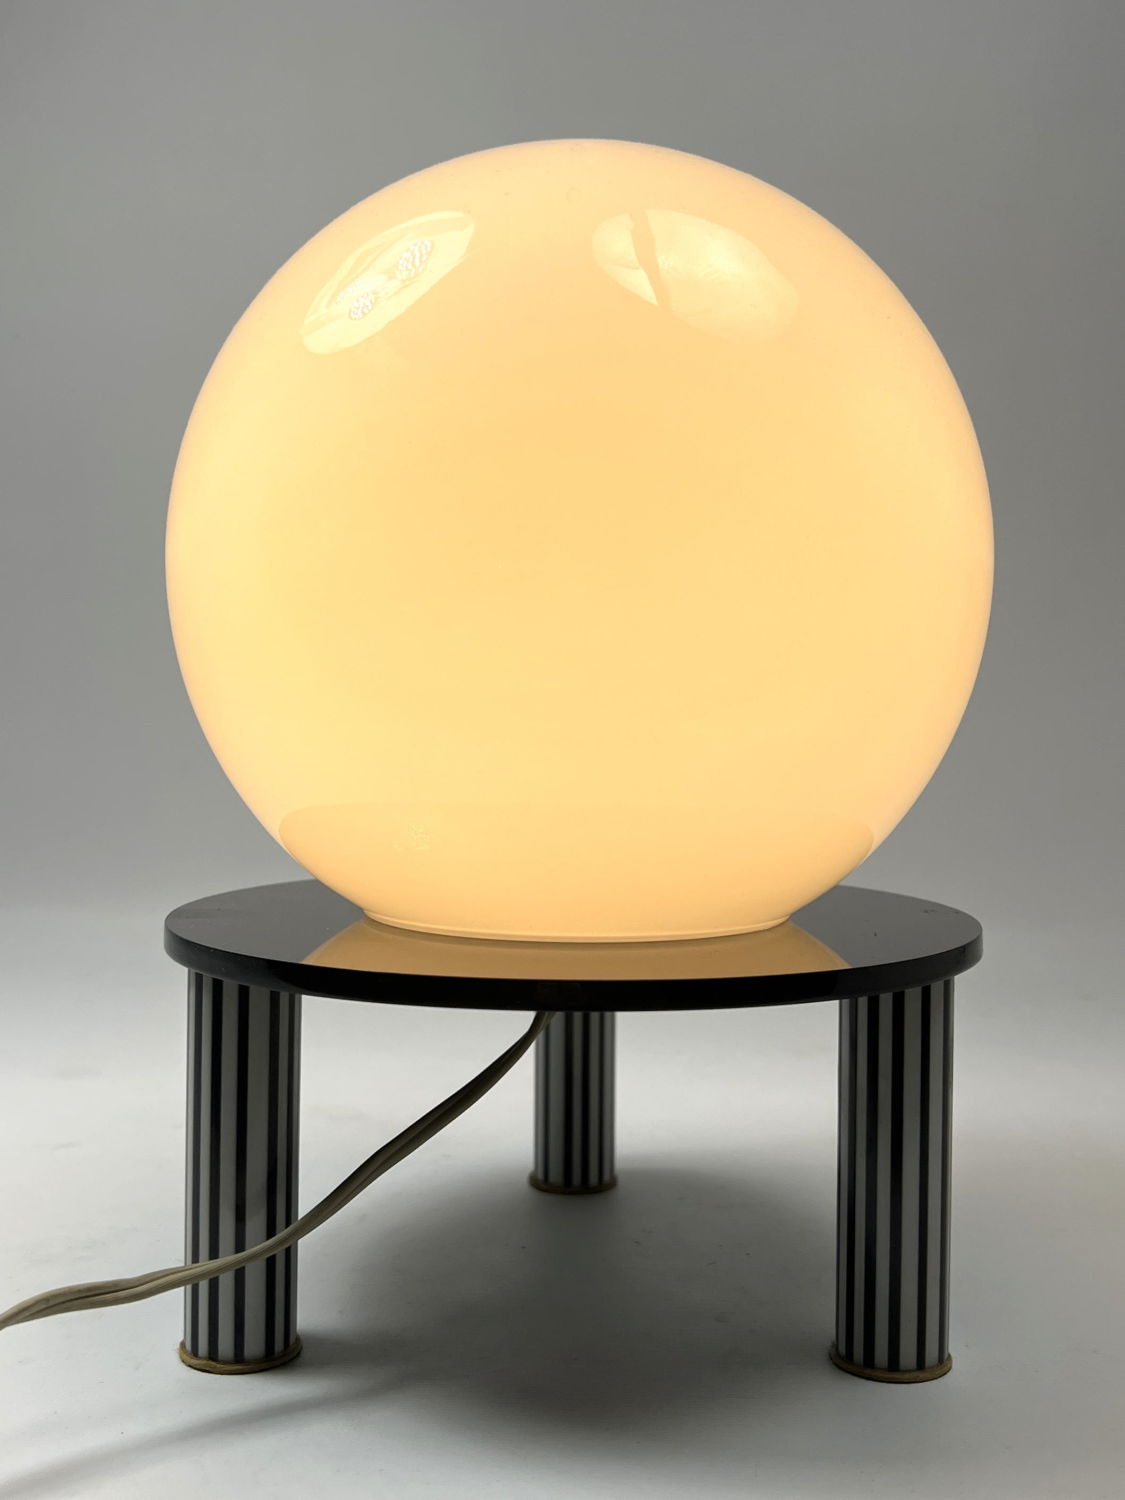 Memphis style Modernist Table Lamp.